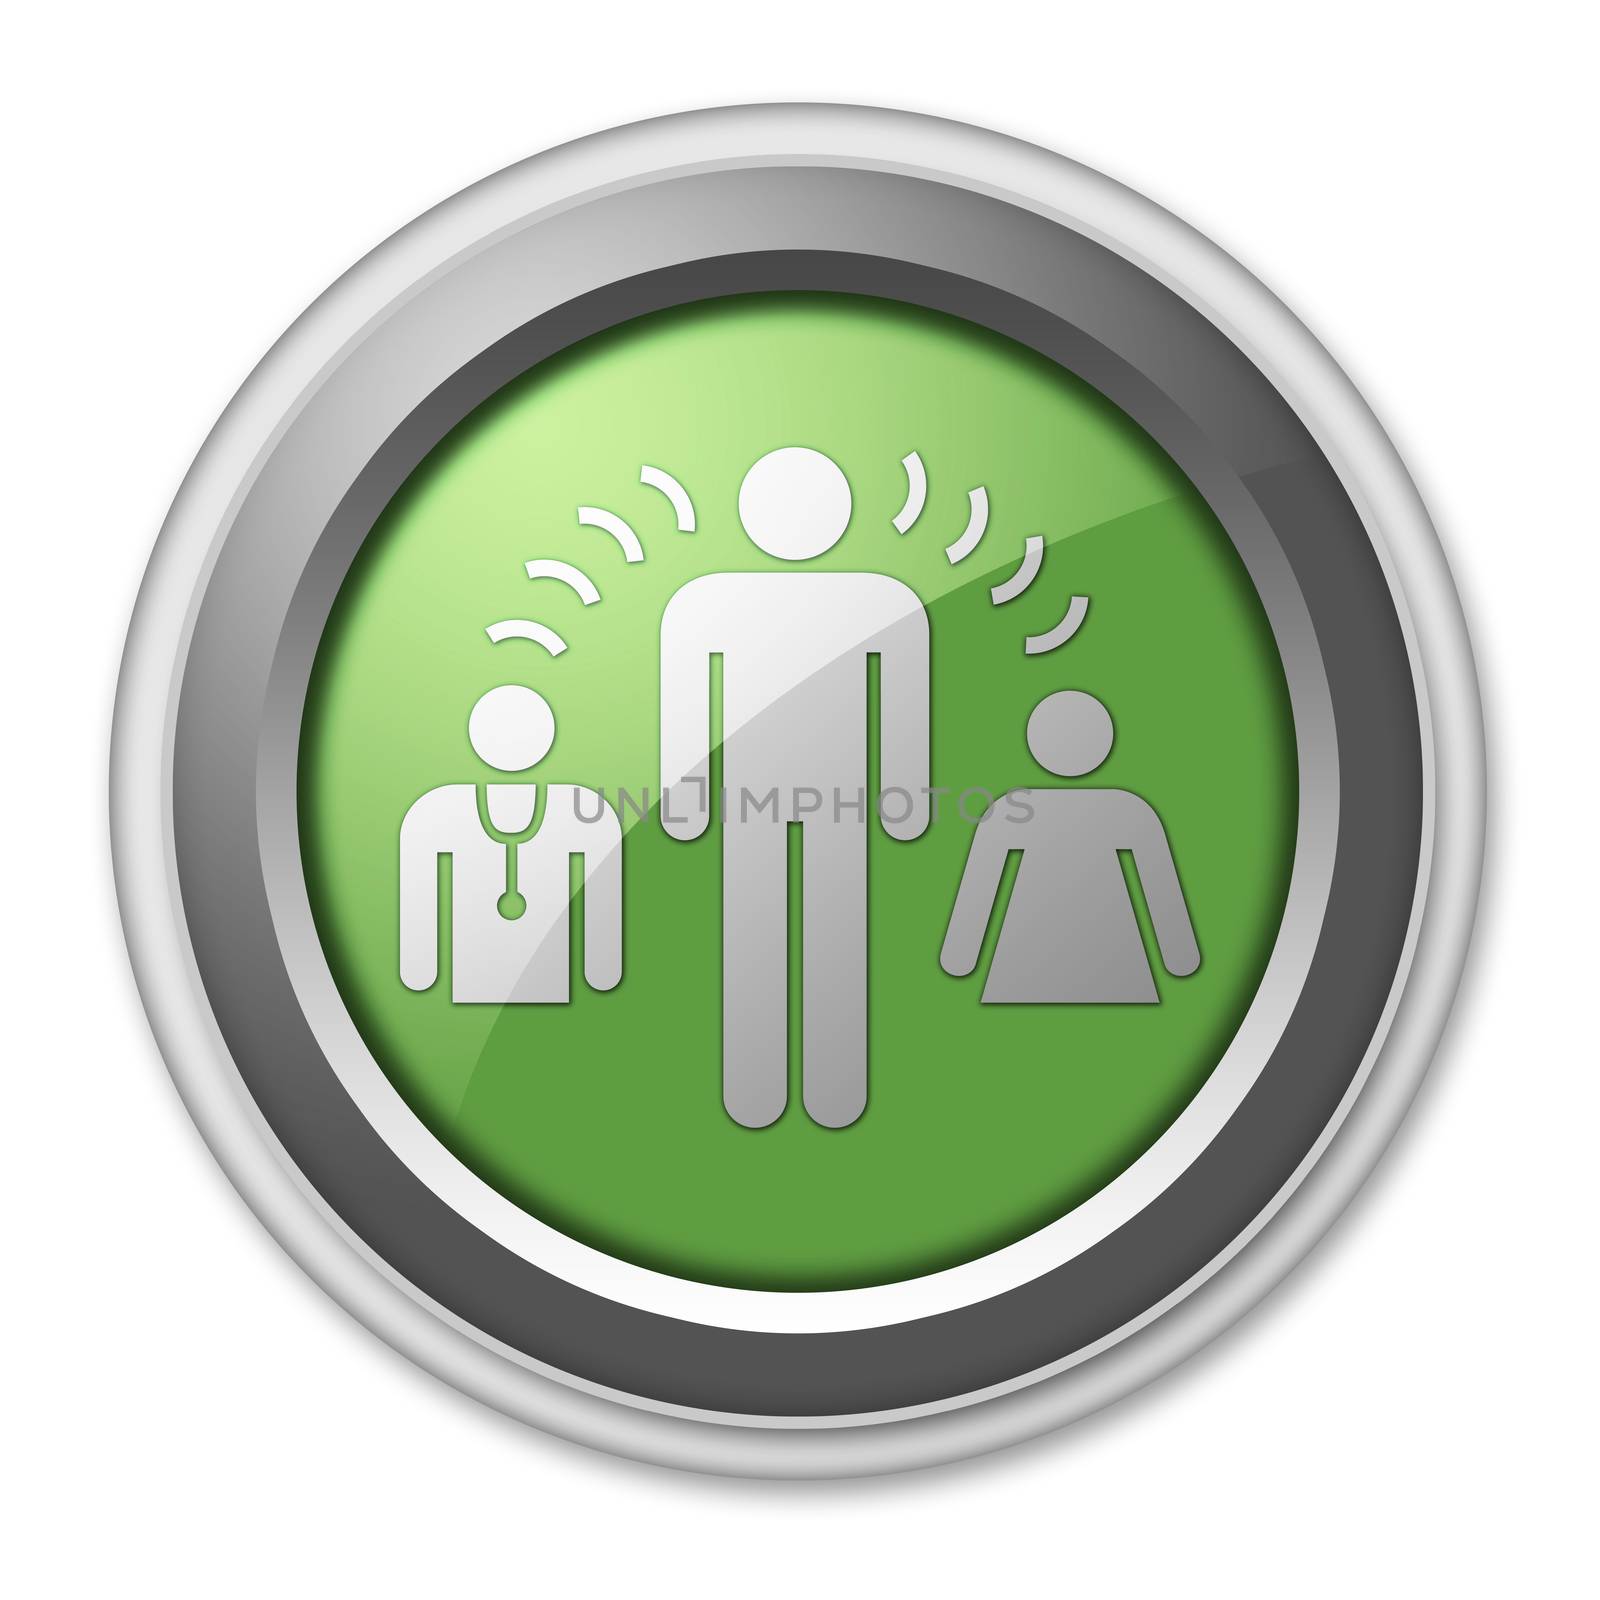 Icon, Button, Pictogram with Interpreter Services symbol